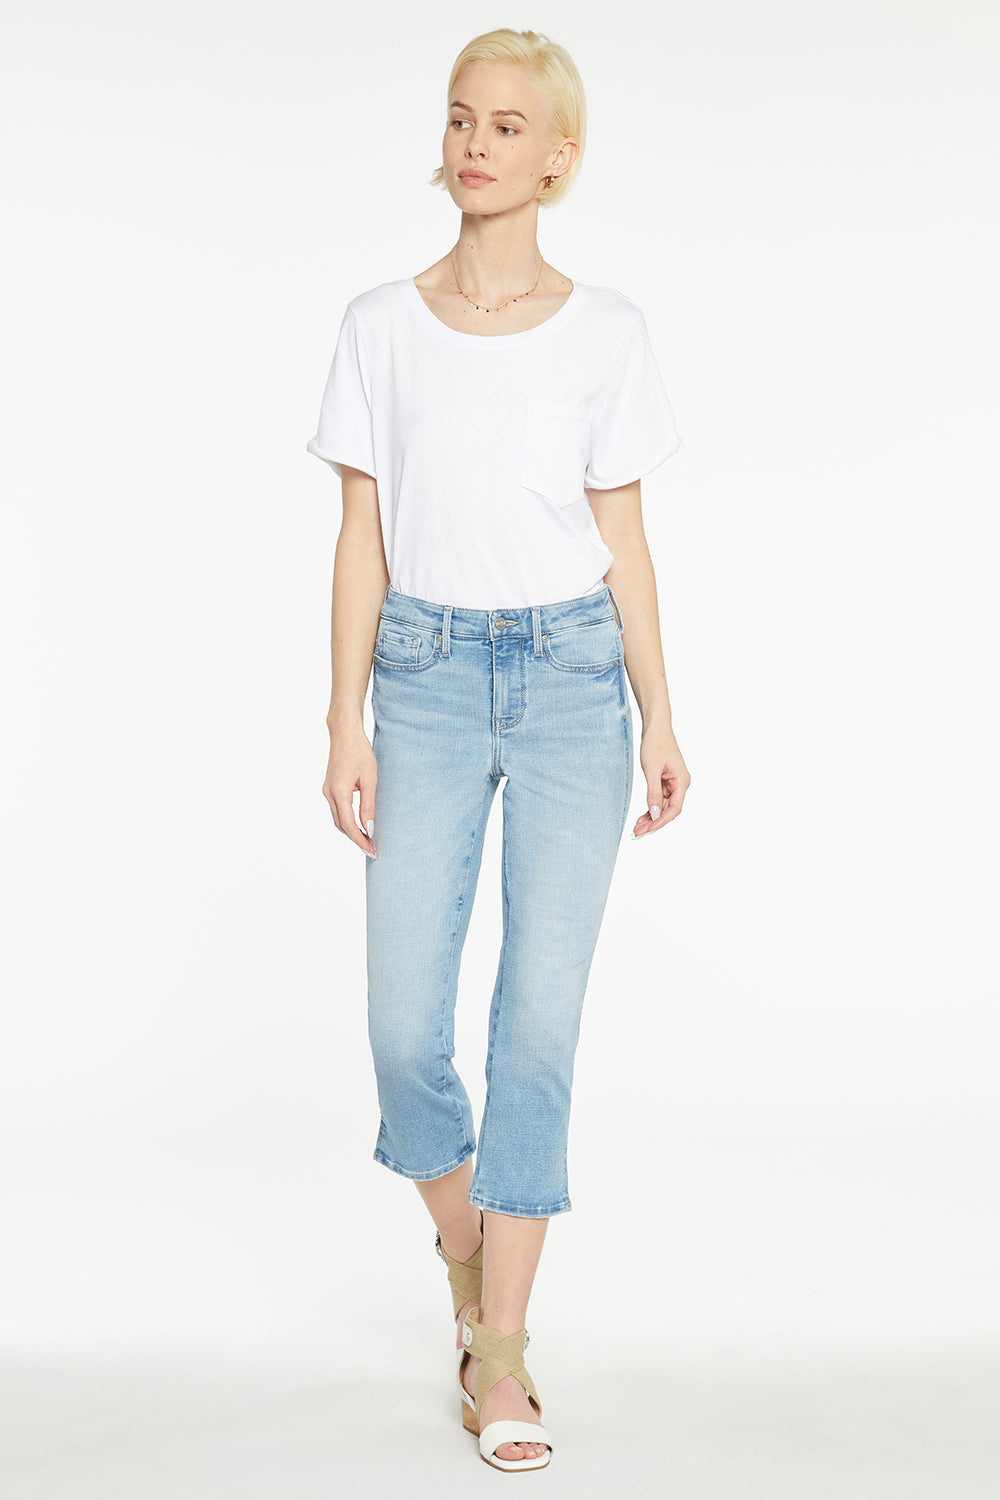 Chloe Capri Jeans In Petite - Easley – NYDJ Apparel